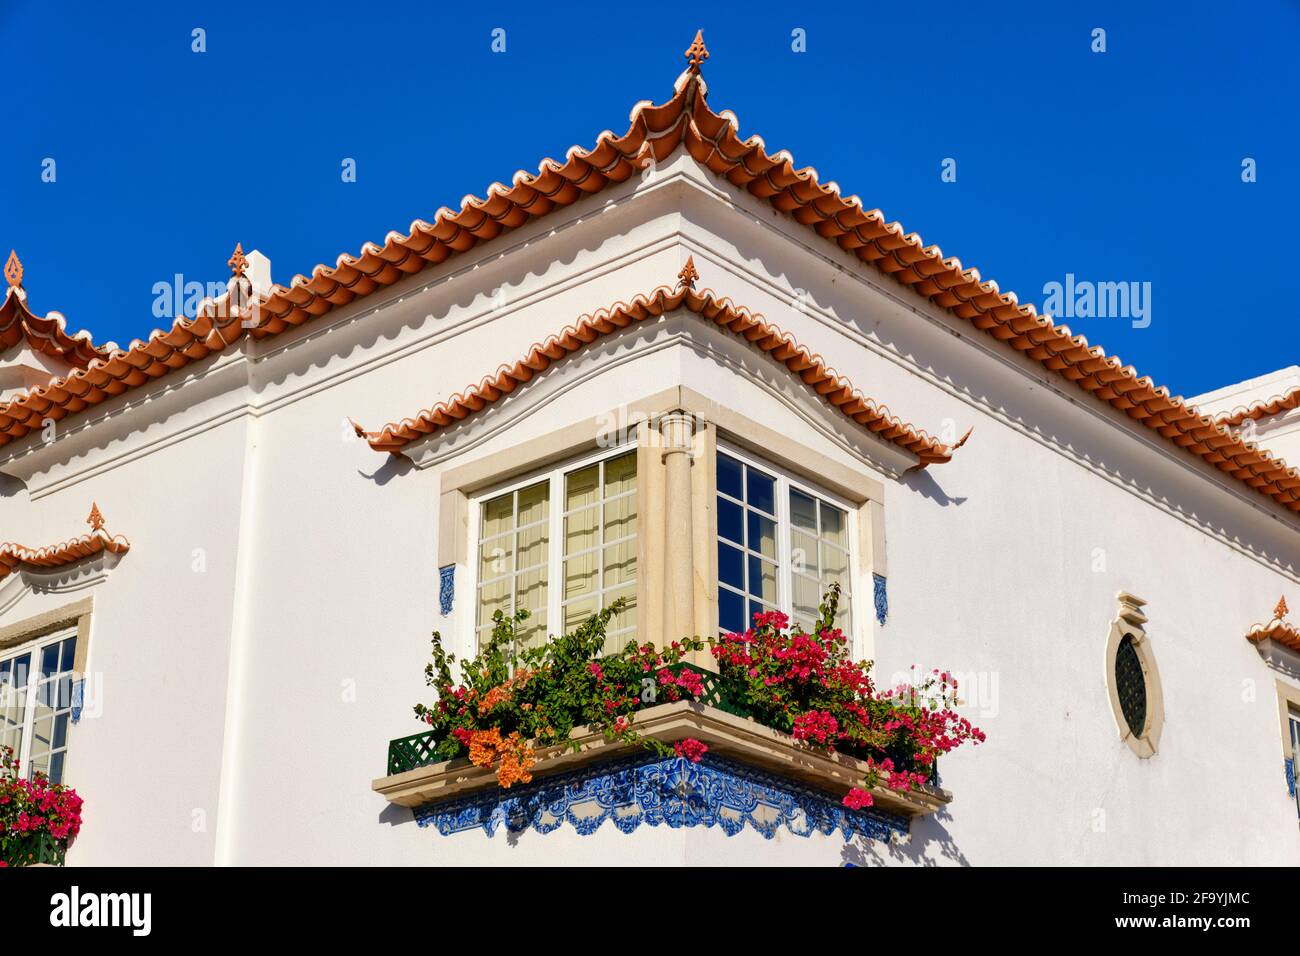 Windows of a traditional house. Alcochete, Portugal Stock Photo